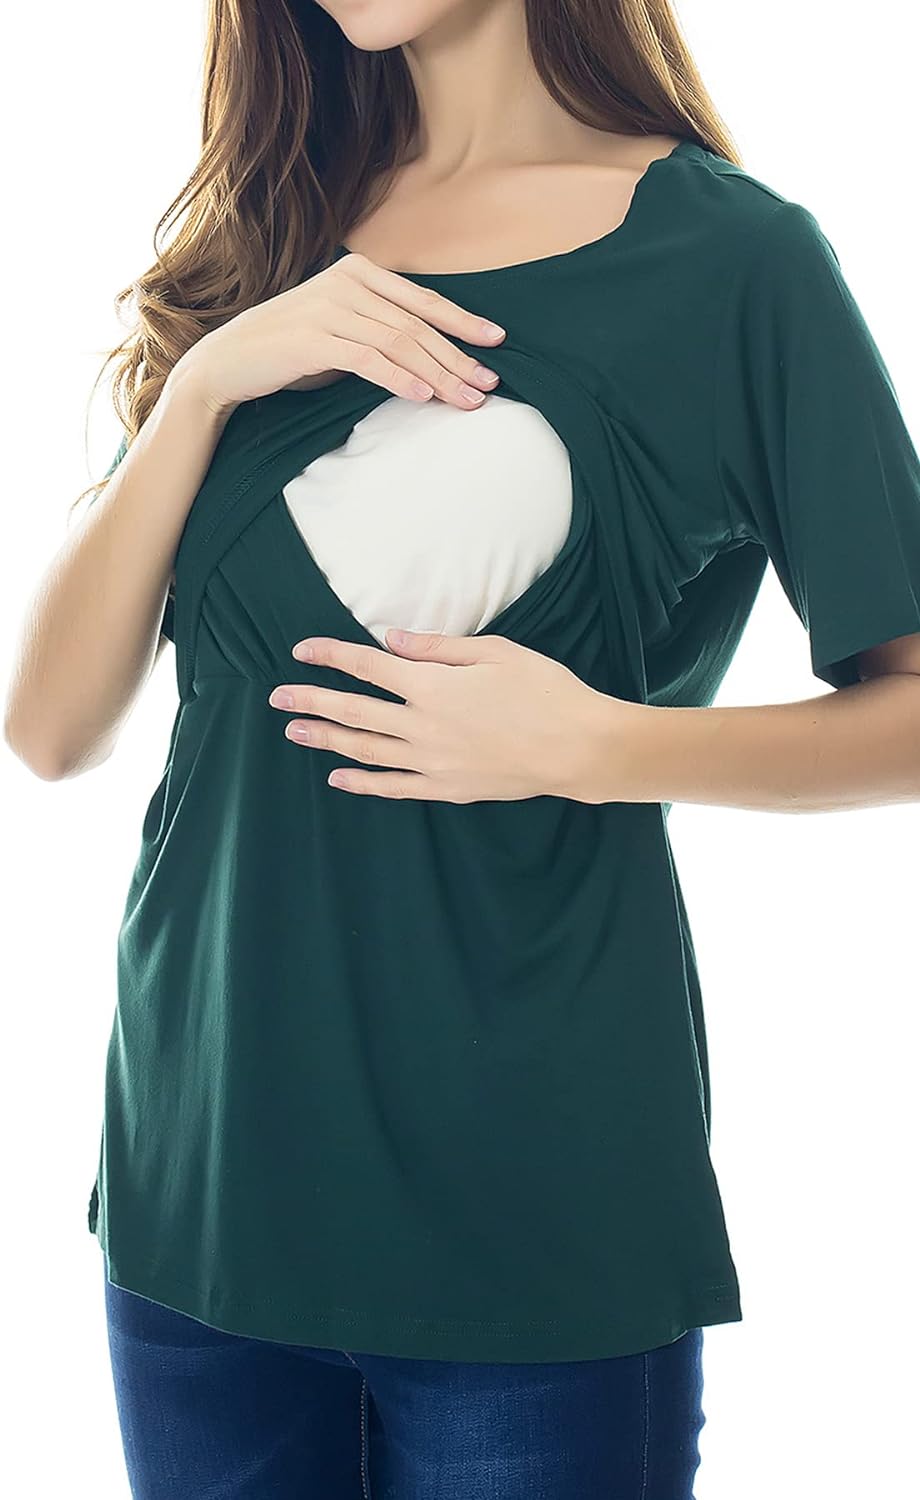 Smallshow Women's Maternity Nursing Tops Short Sleeve Breastfeeding Clothes